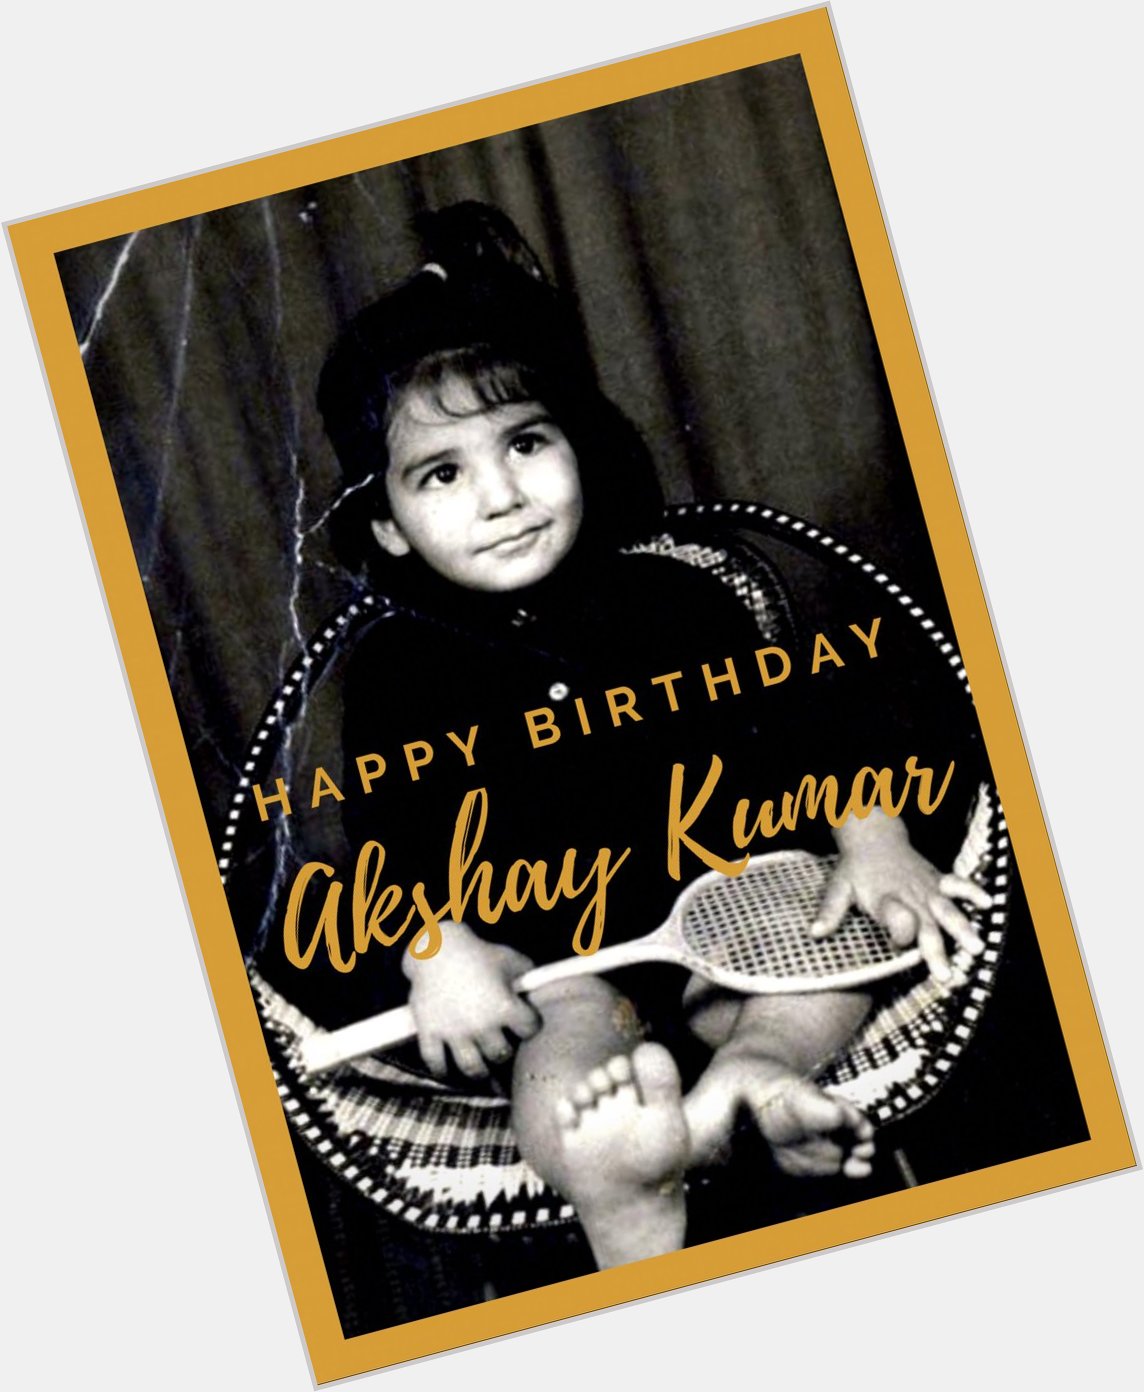 Happy Birthday Akshay Kumar ... Greetings from Israel  